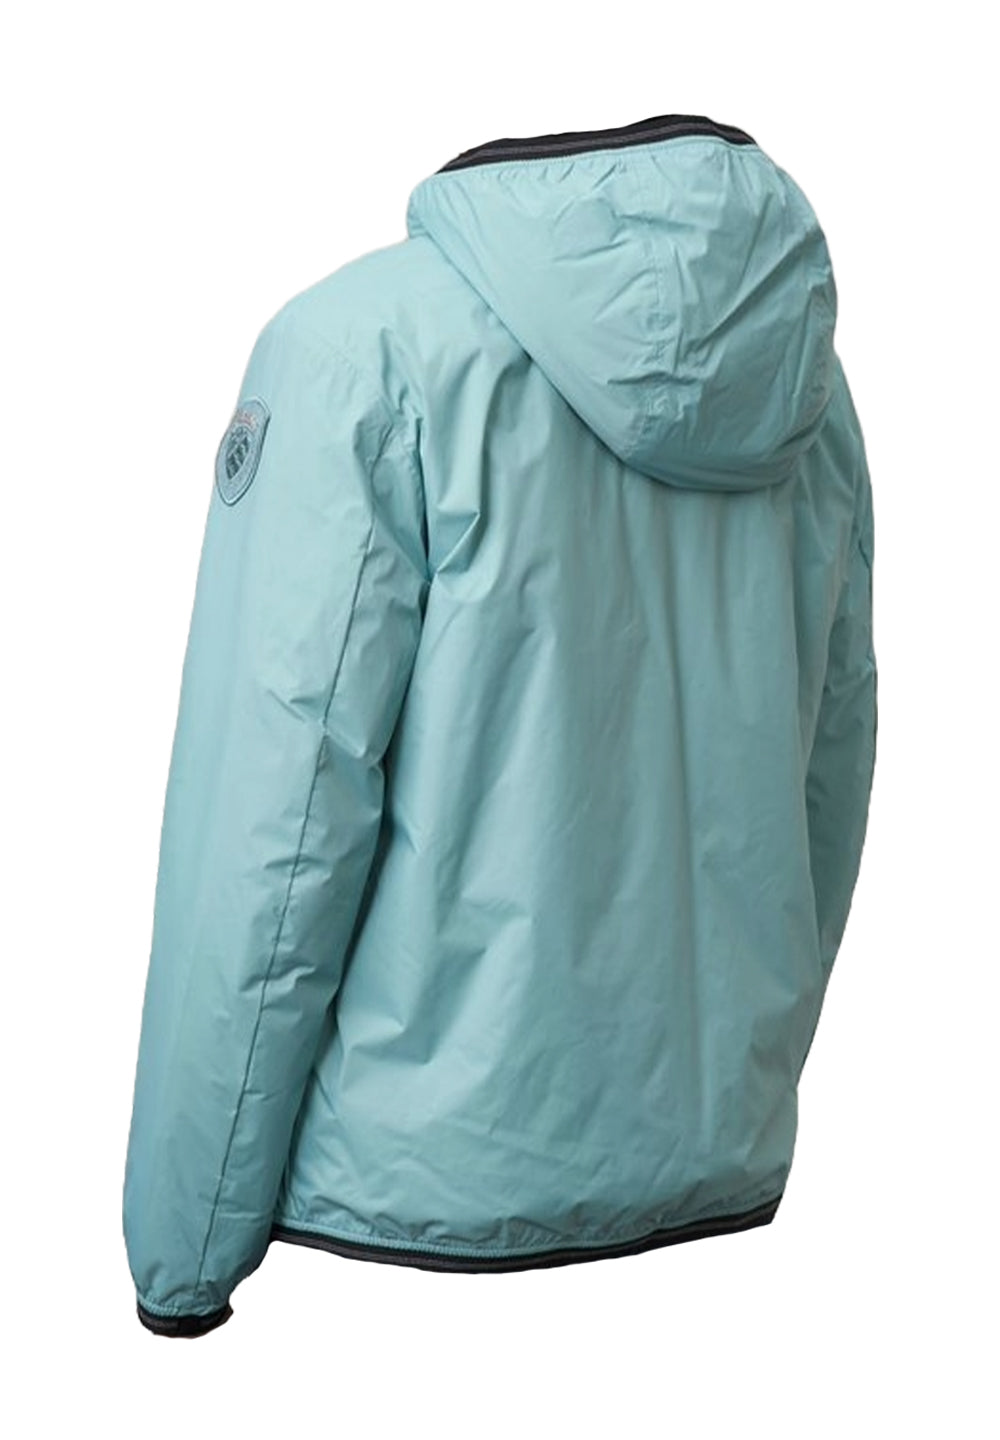 Light blue jacket for girls